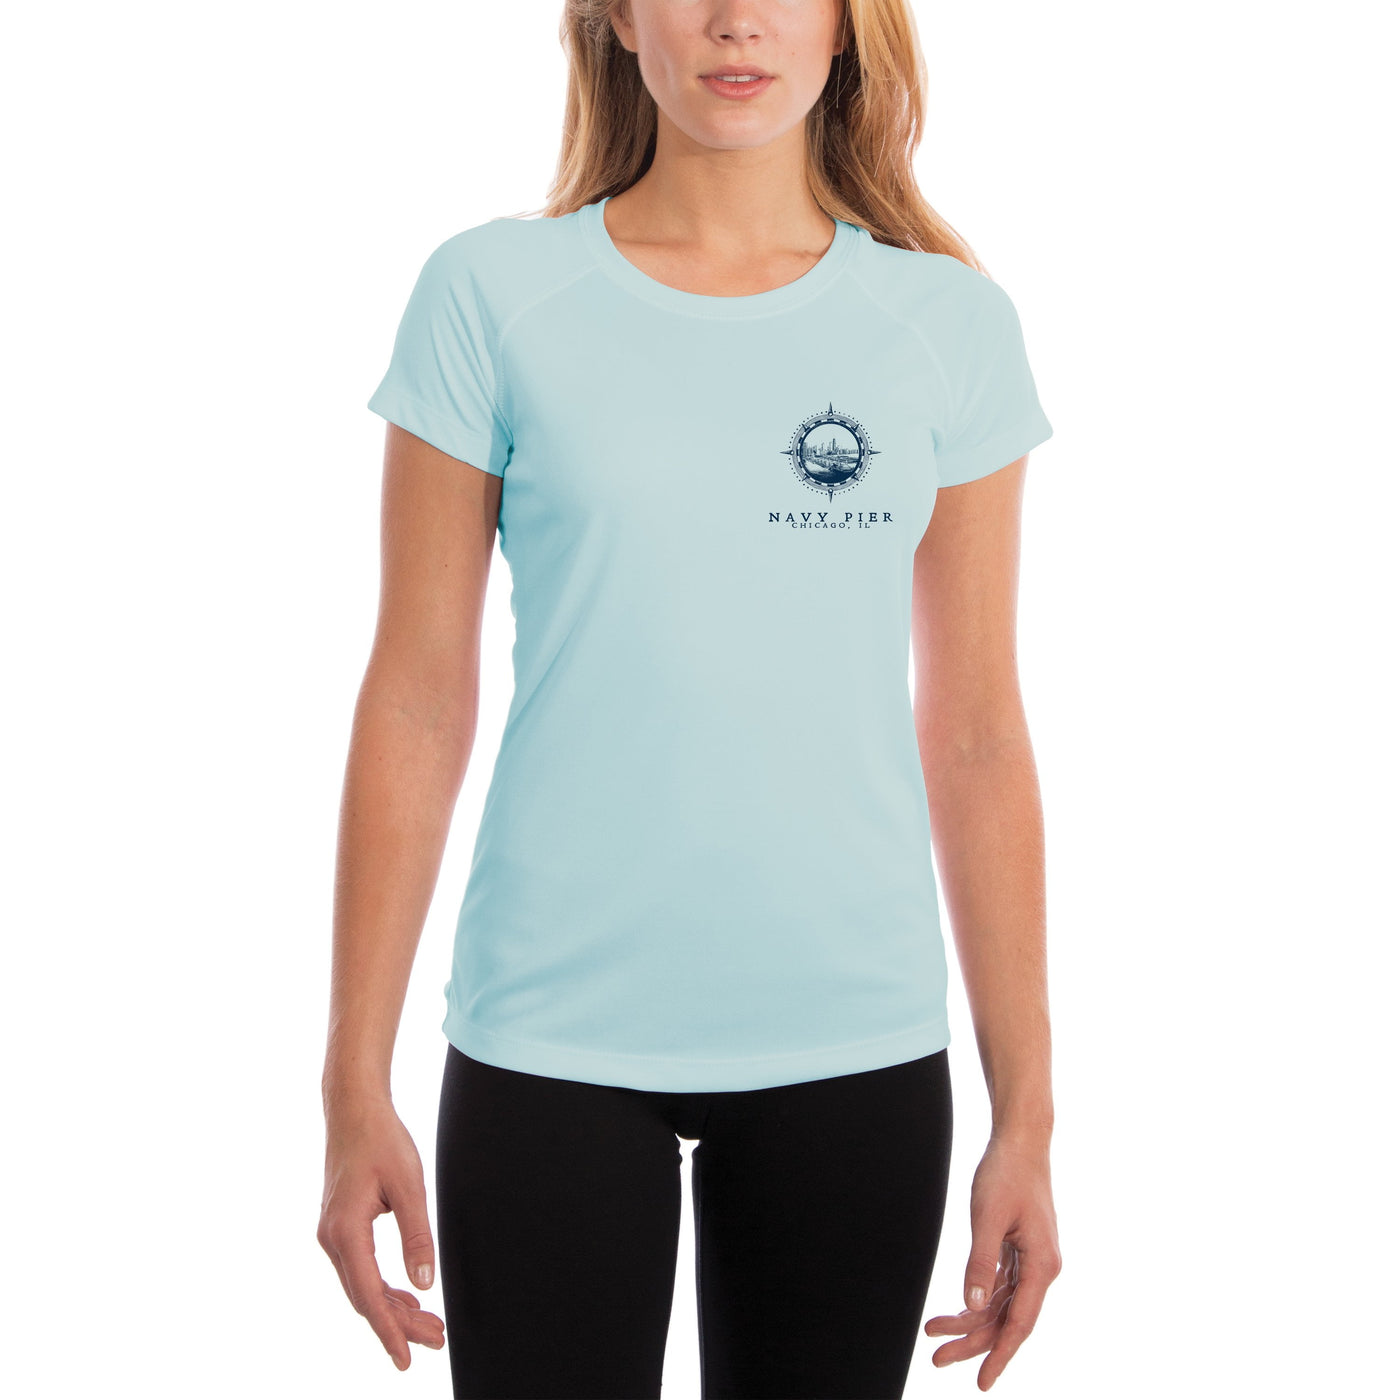 Compass Vintage Navy Pier Women's UPF 50+ Short Sleeve T-shirt